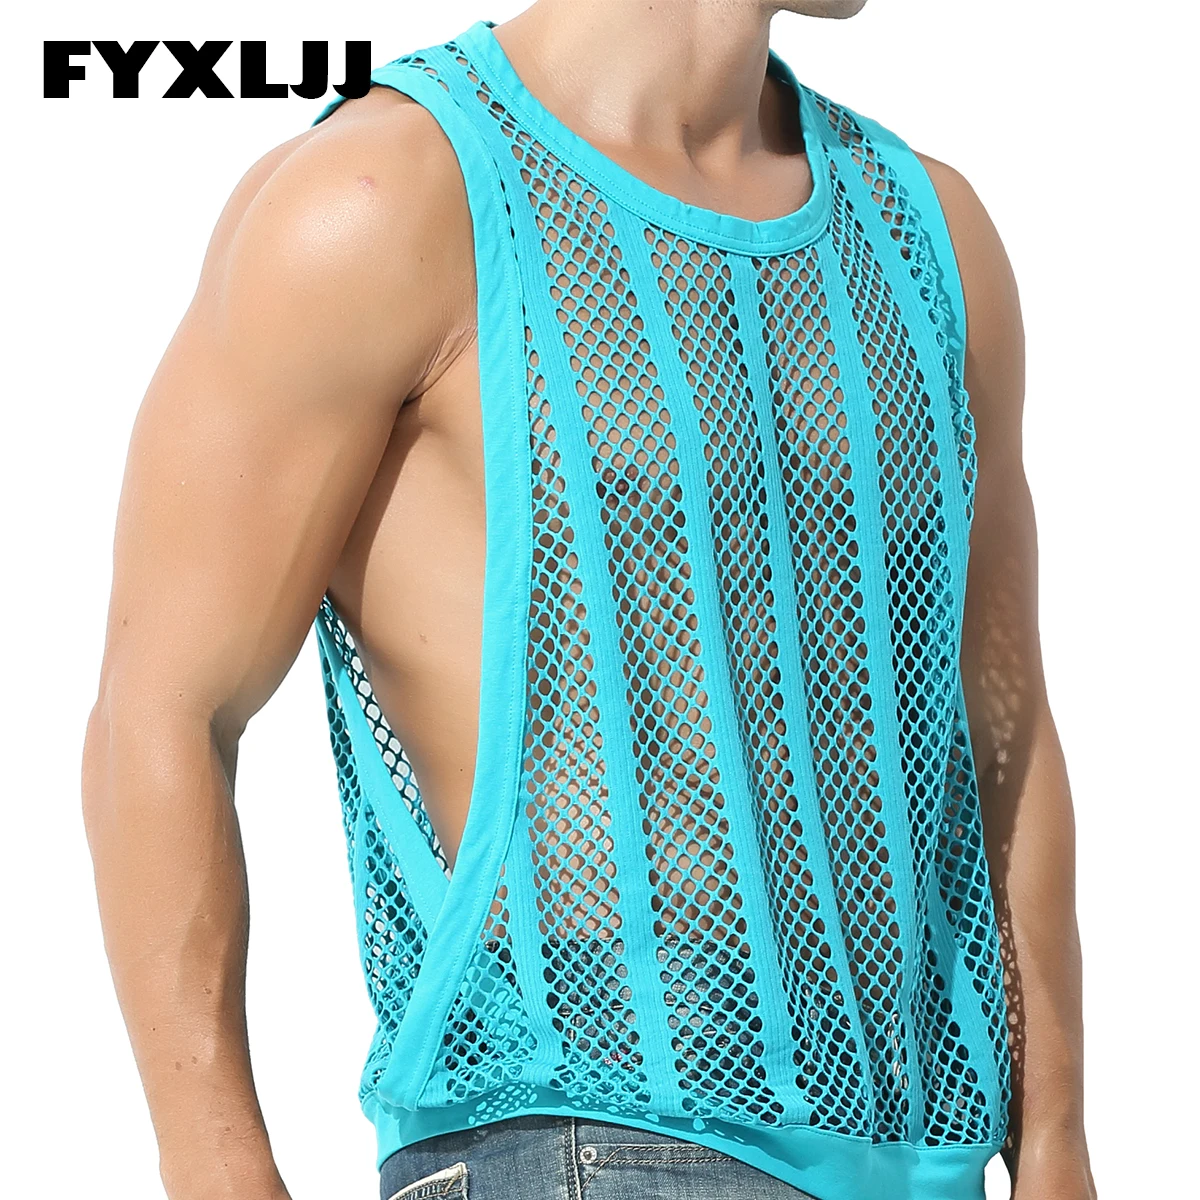 

FYXLJJ Men's Transparent Muscle Tank Tops Sleeveless Undershirts Sexy Mesh Sheer Hollow Vest See Through Fishnet T Shirt Singlet